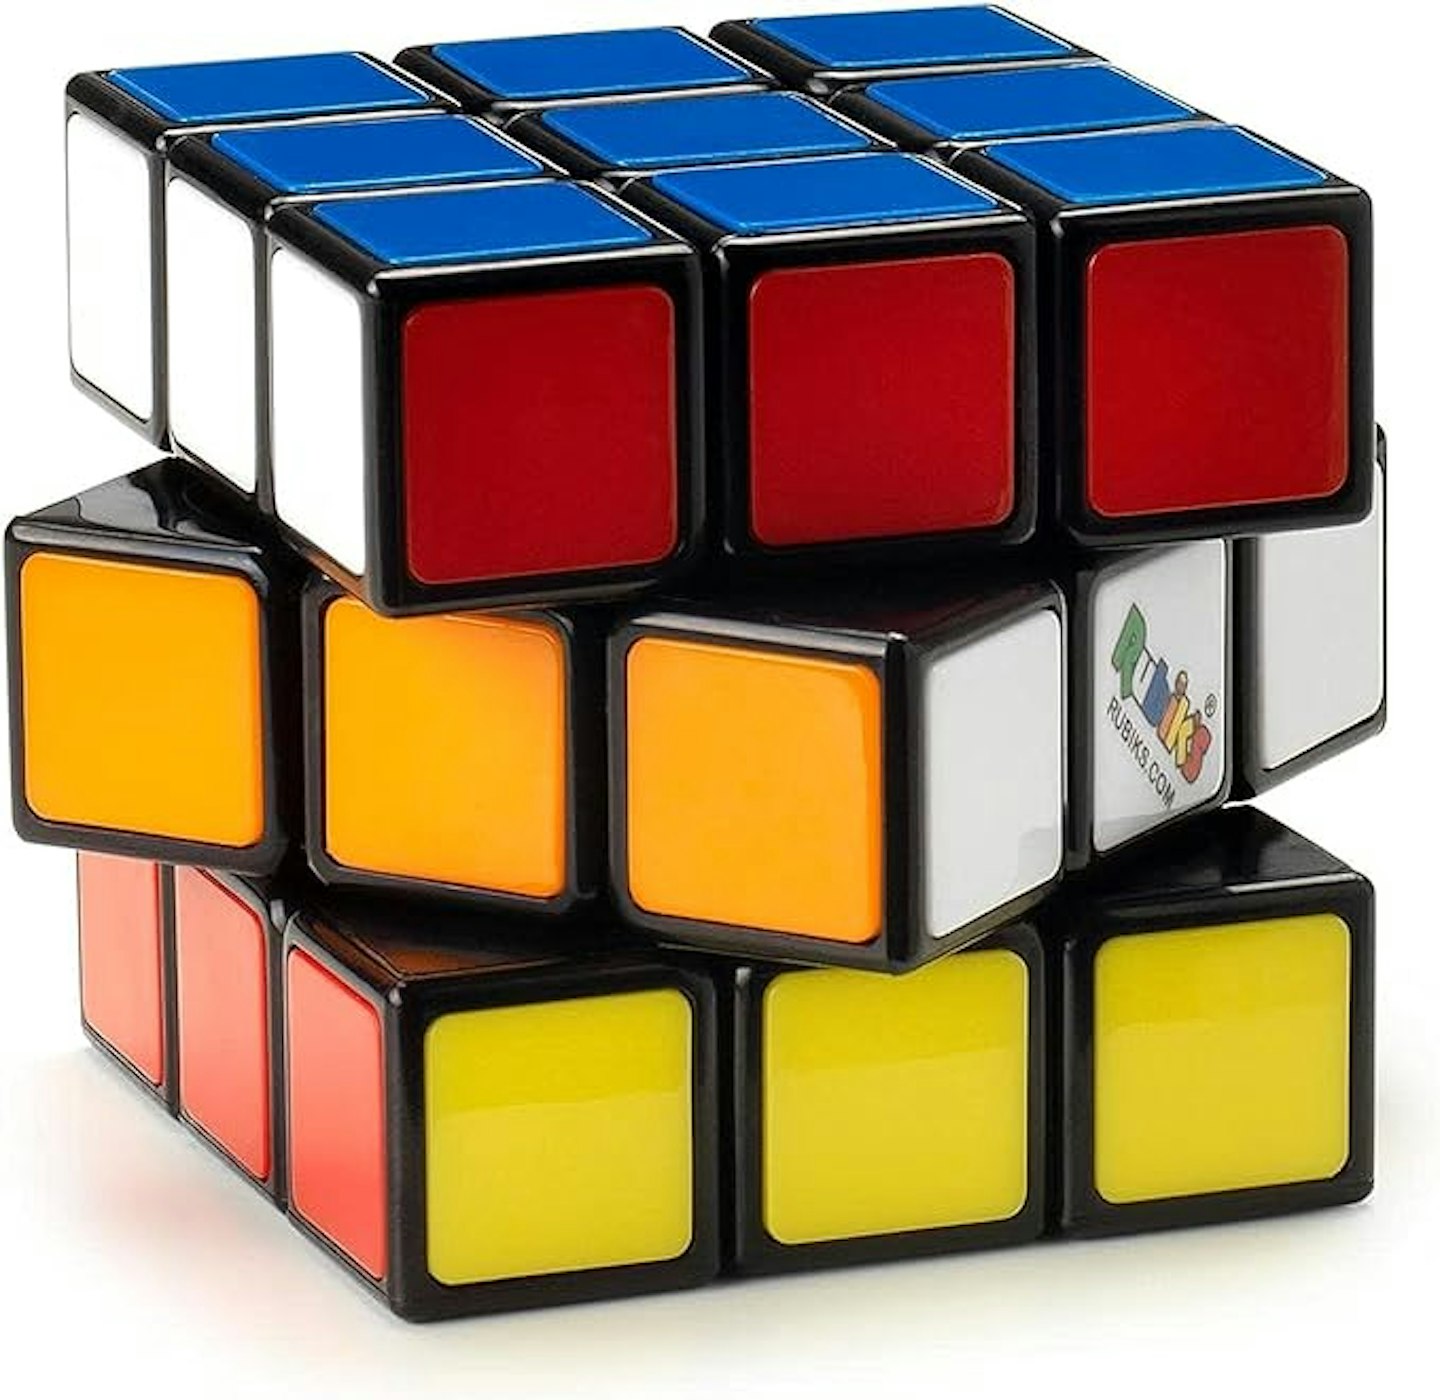 Ernő Rubik: Inventor Of The Rubik's Cube